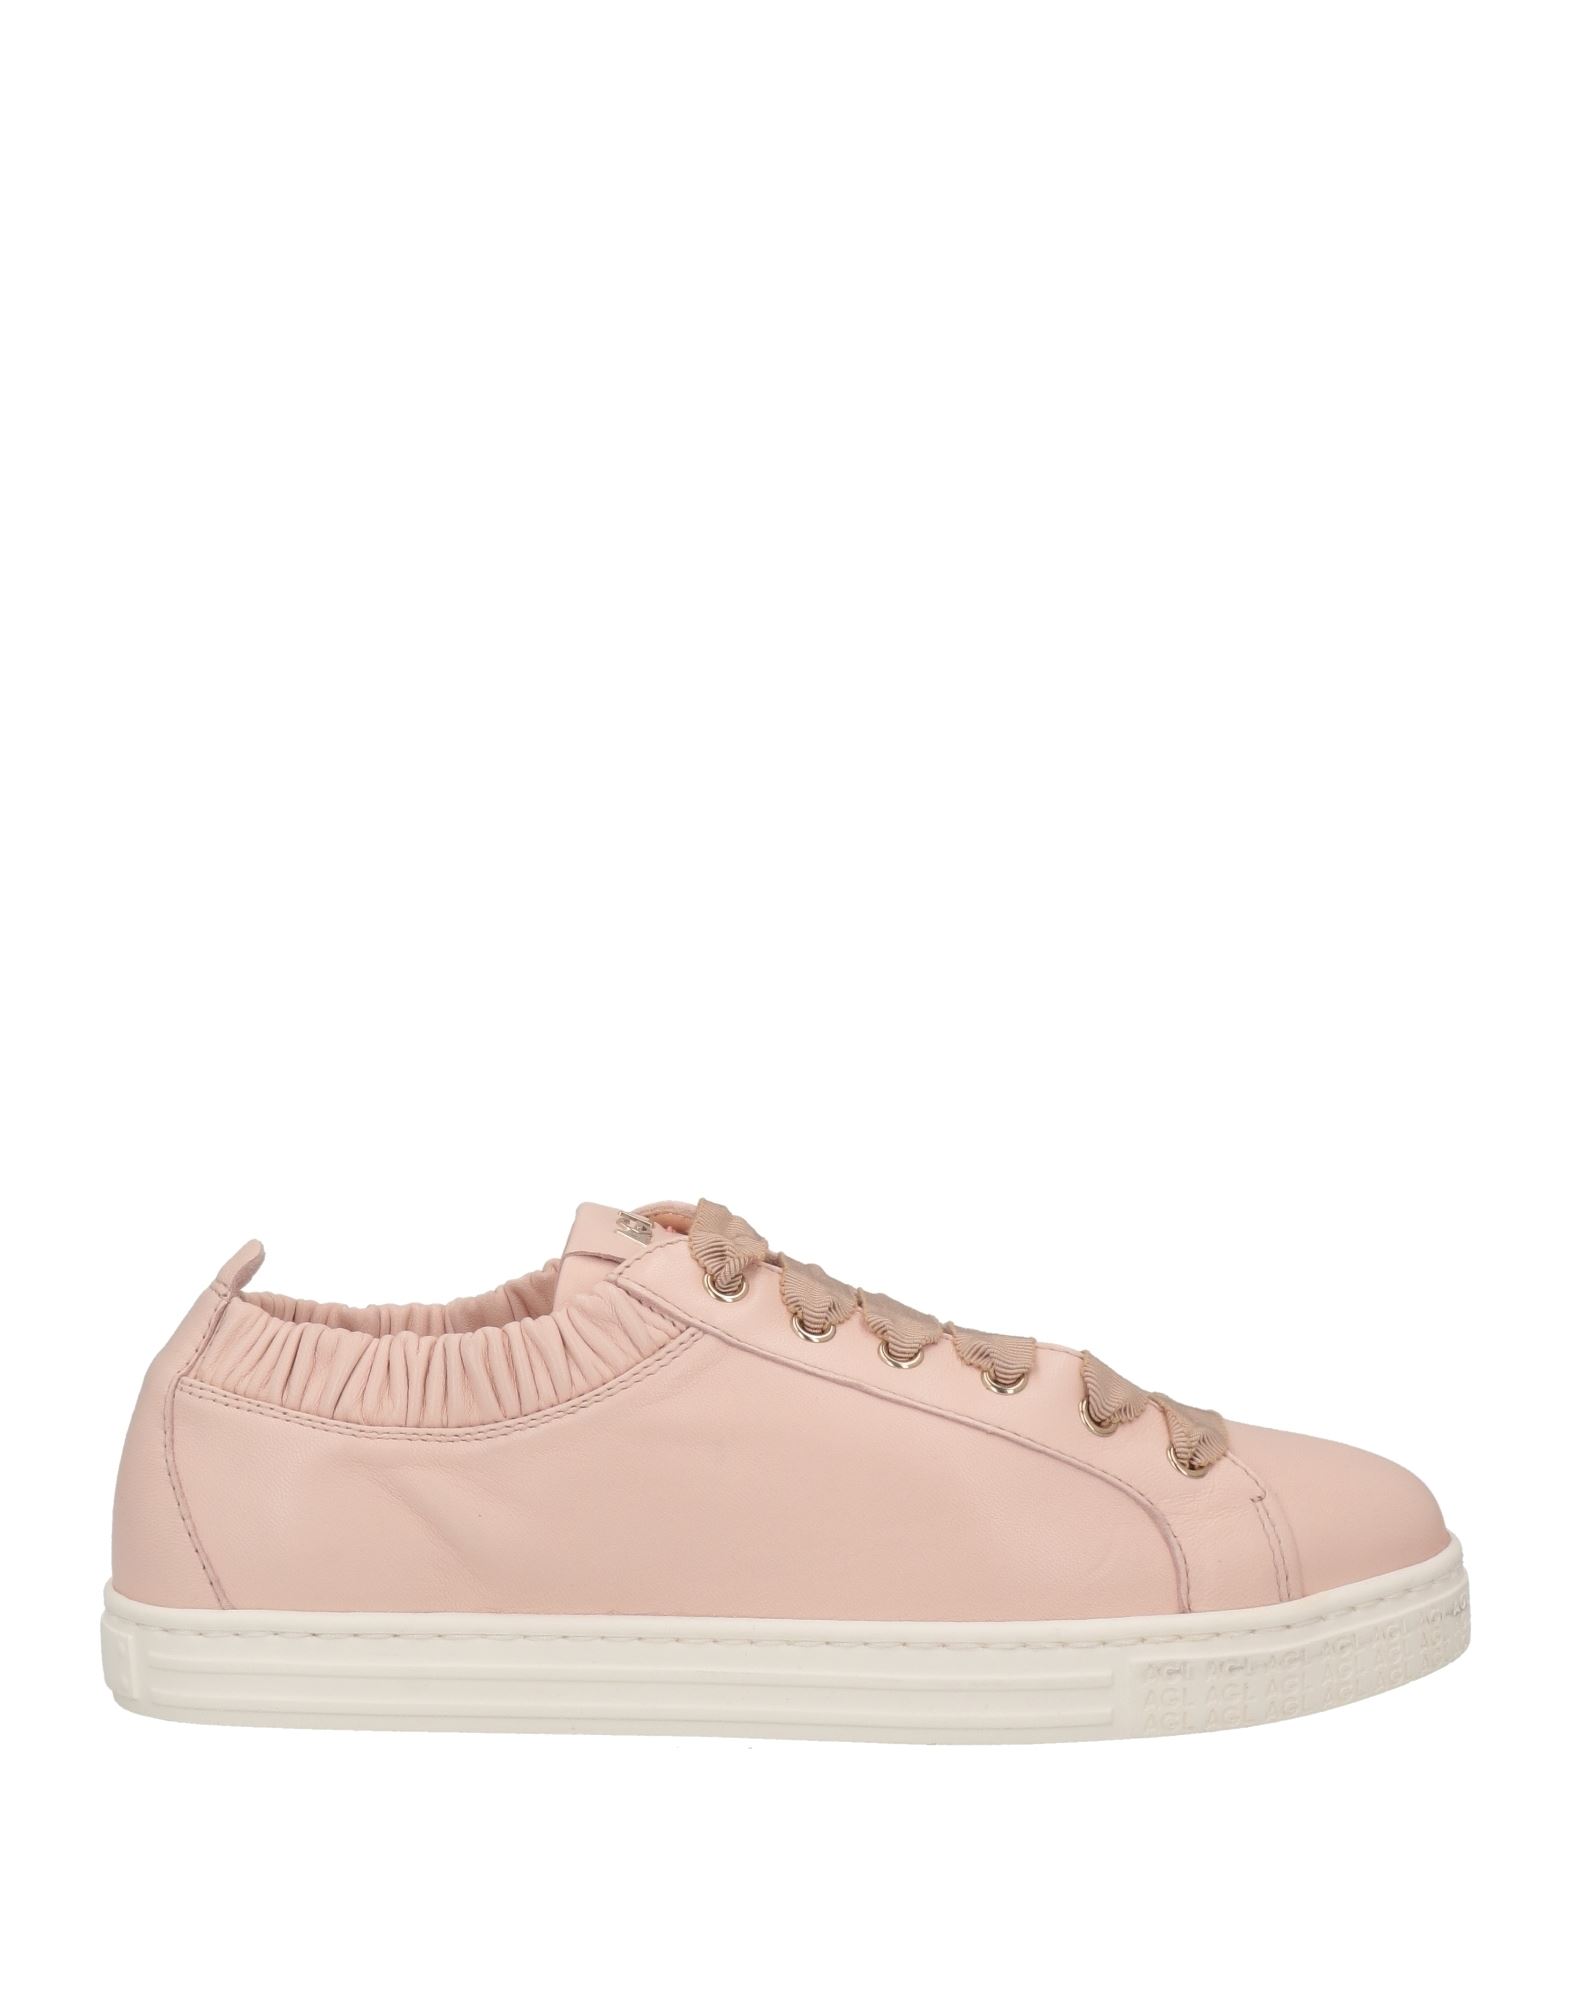 Shop Agl Attilio Giusti Leombruni Agl Woman Sneakers Light Pink Size 7.5 Soft Leather